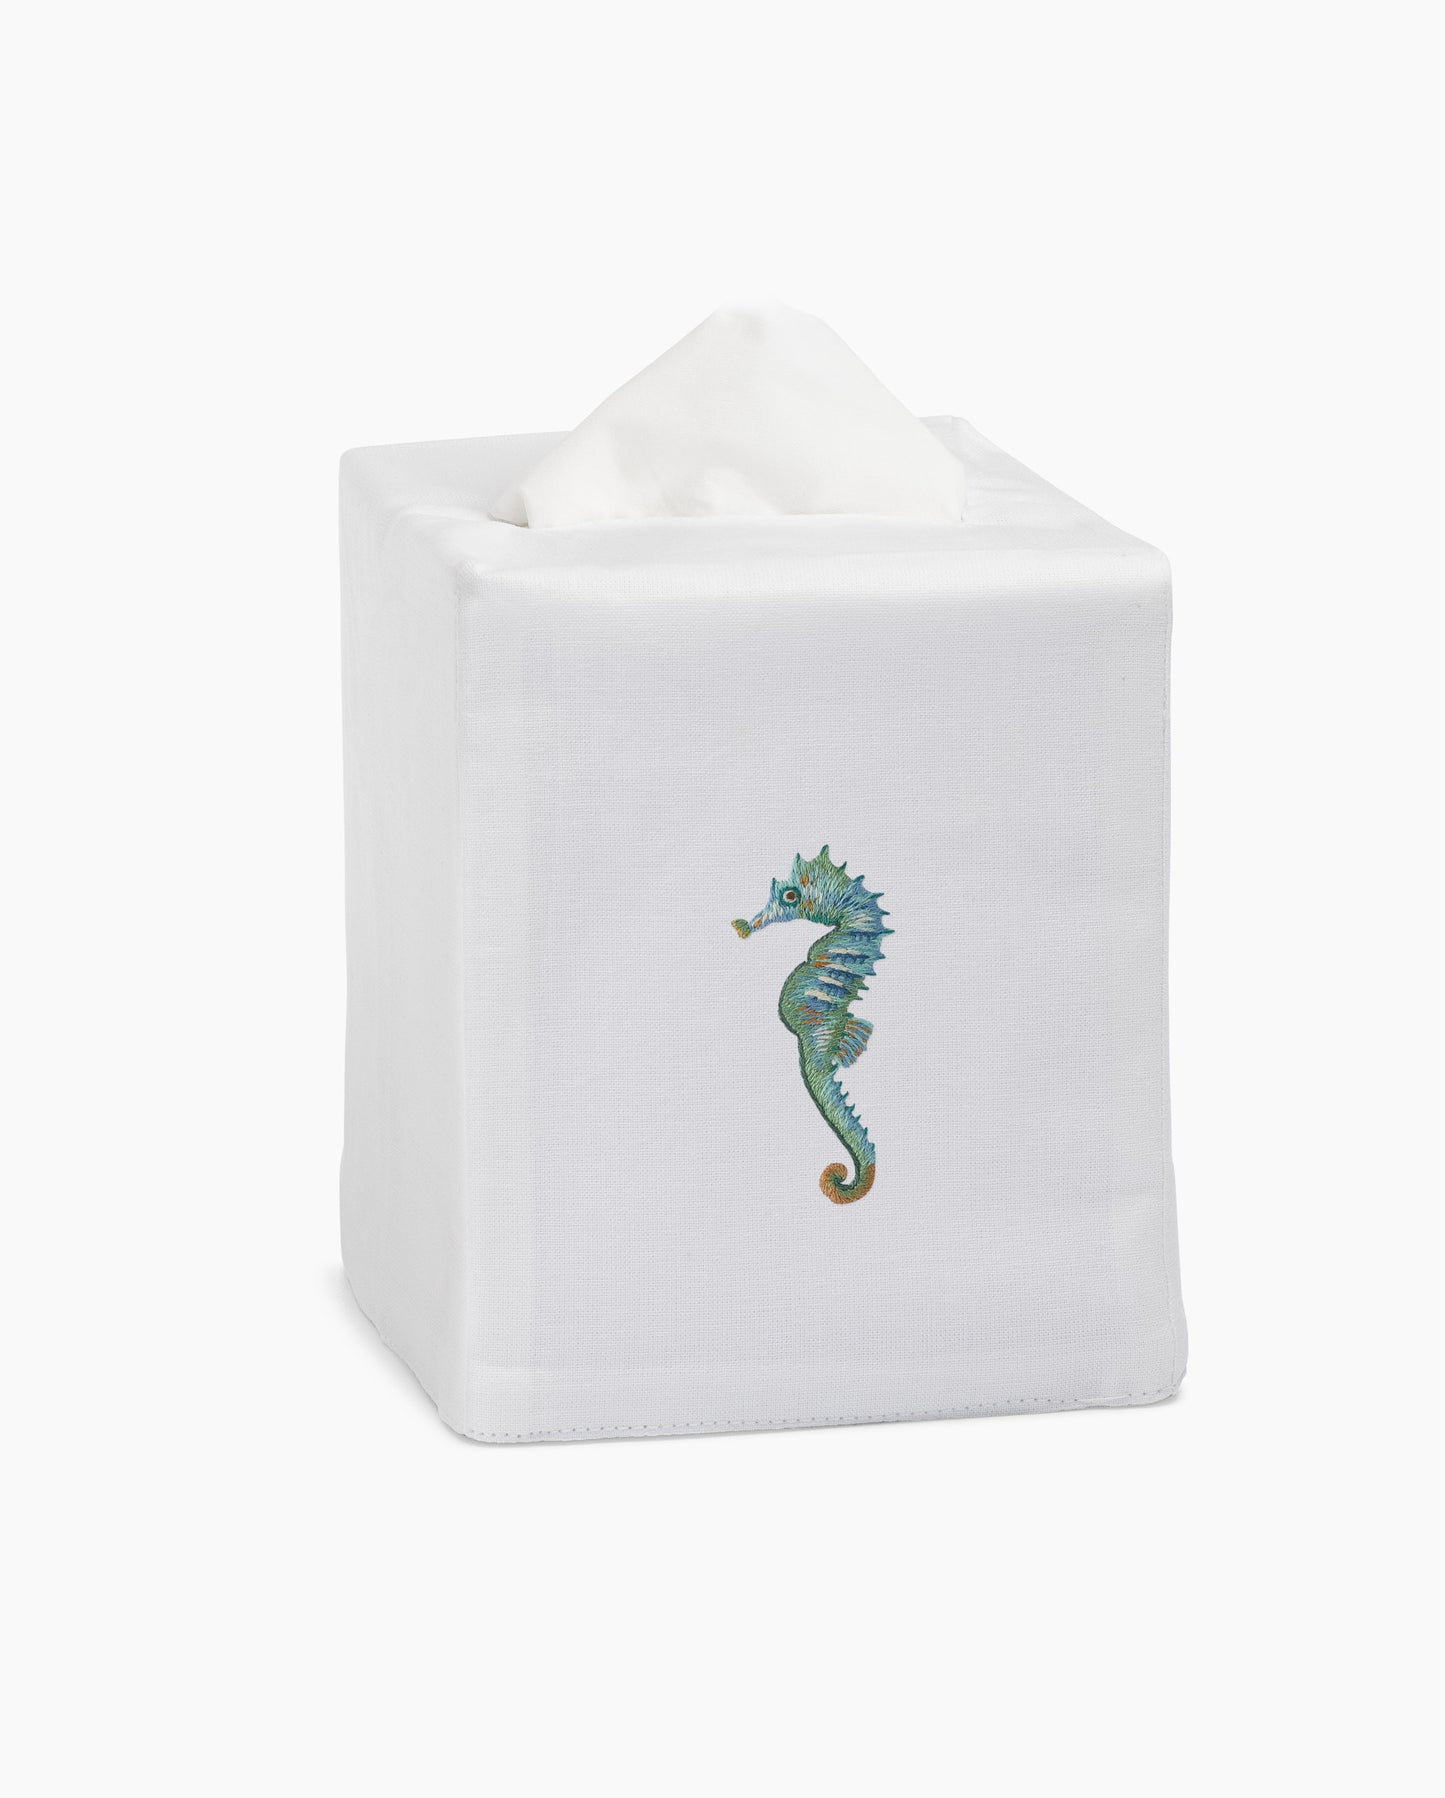 Seahorse Aqua Tissue Box Cover